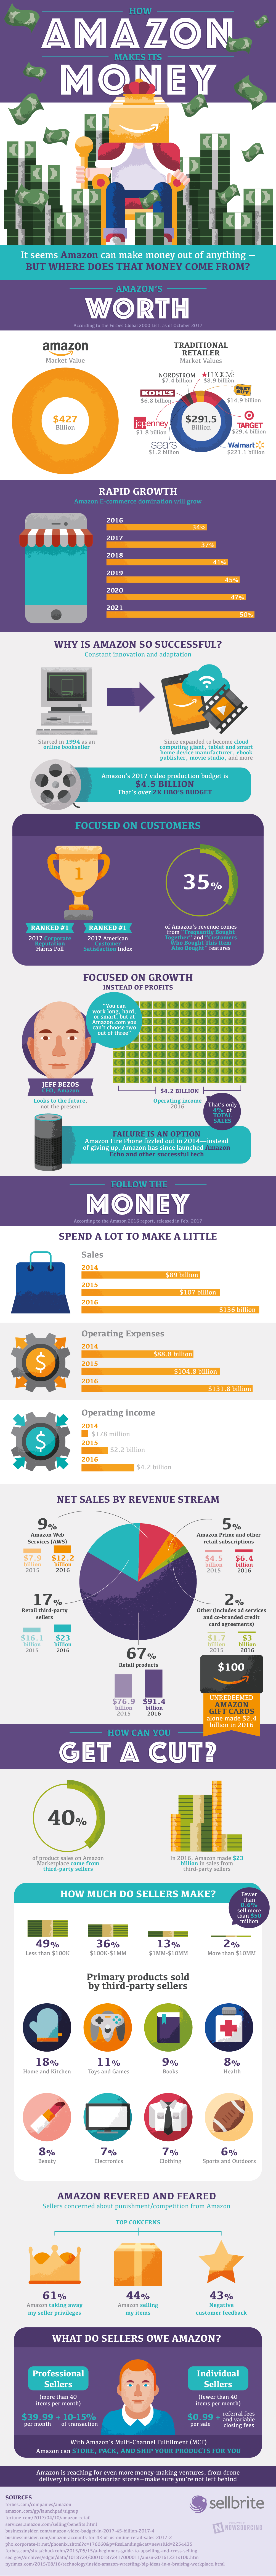 Infographic Breaking Down How Amazon Makes Money